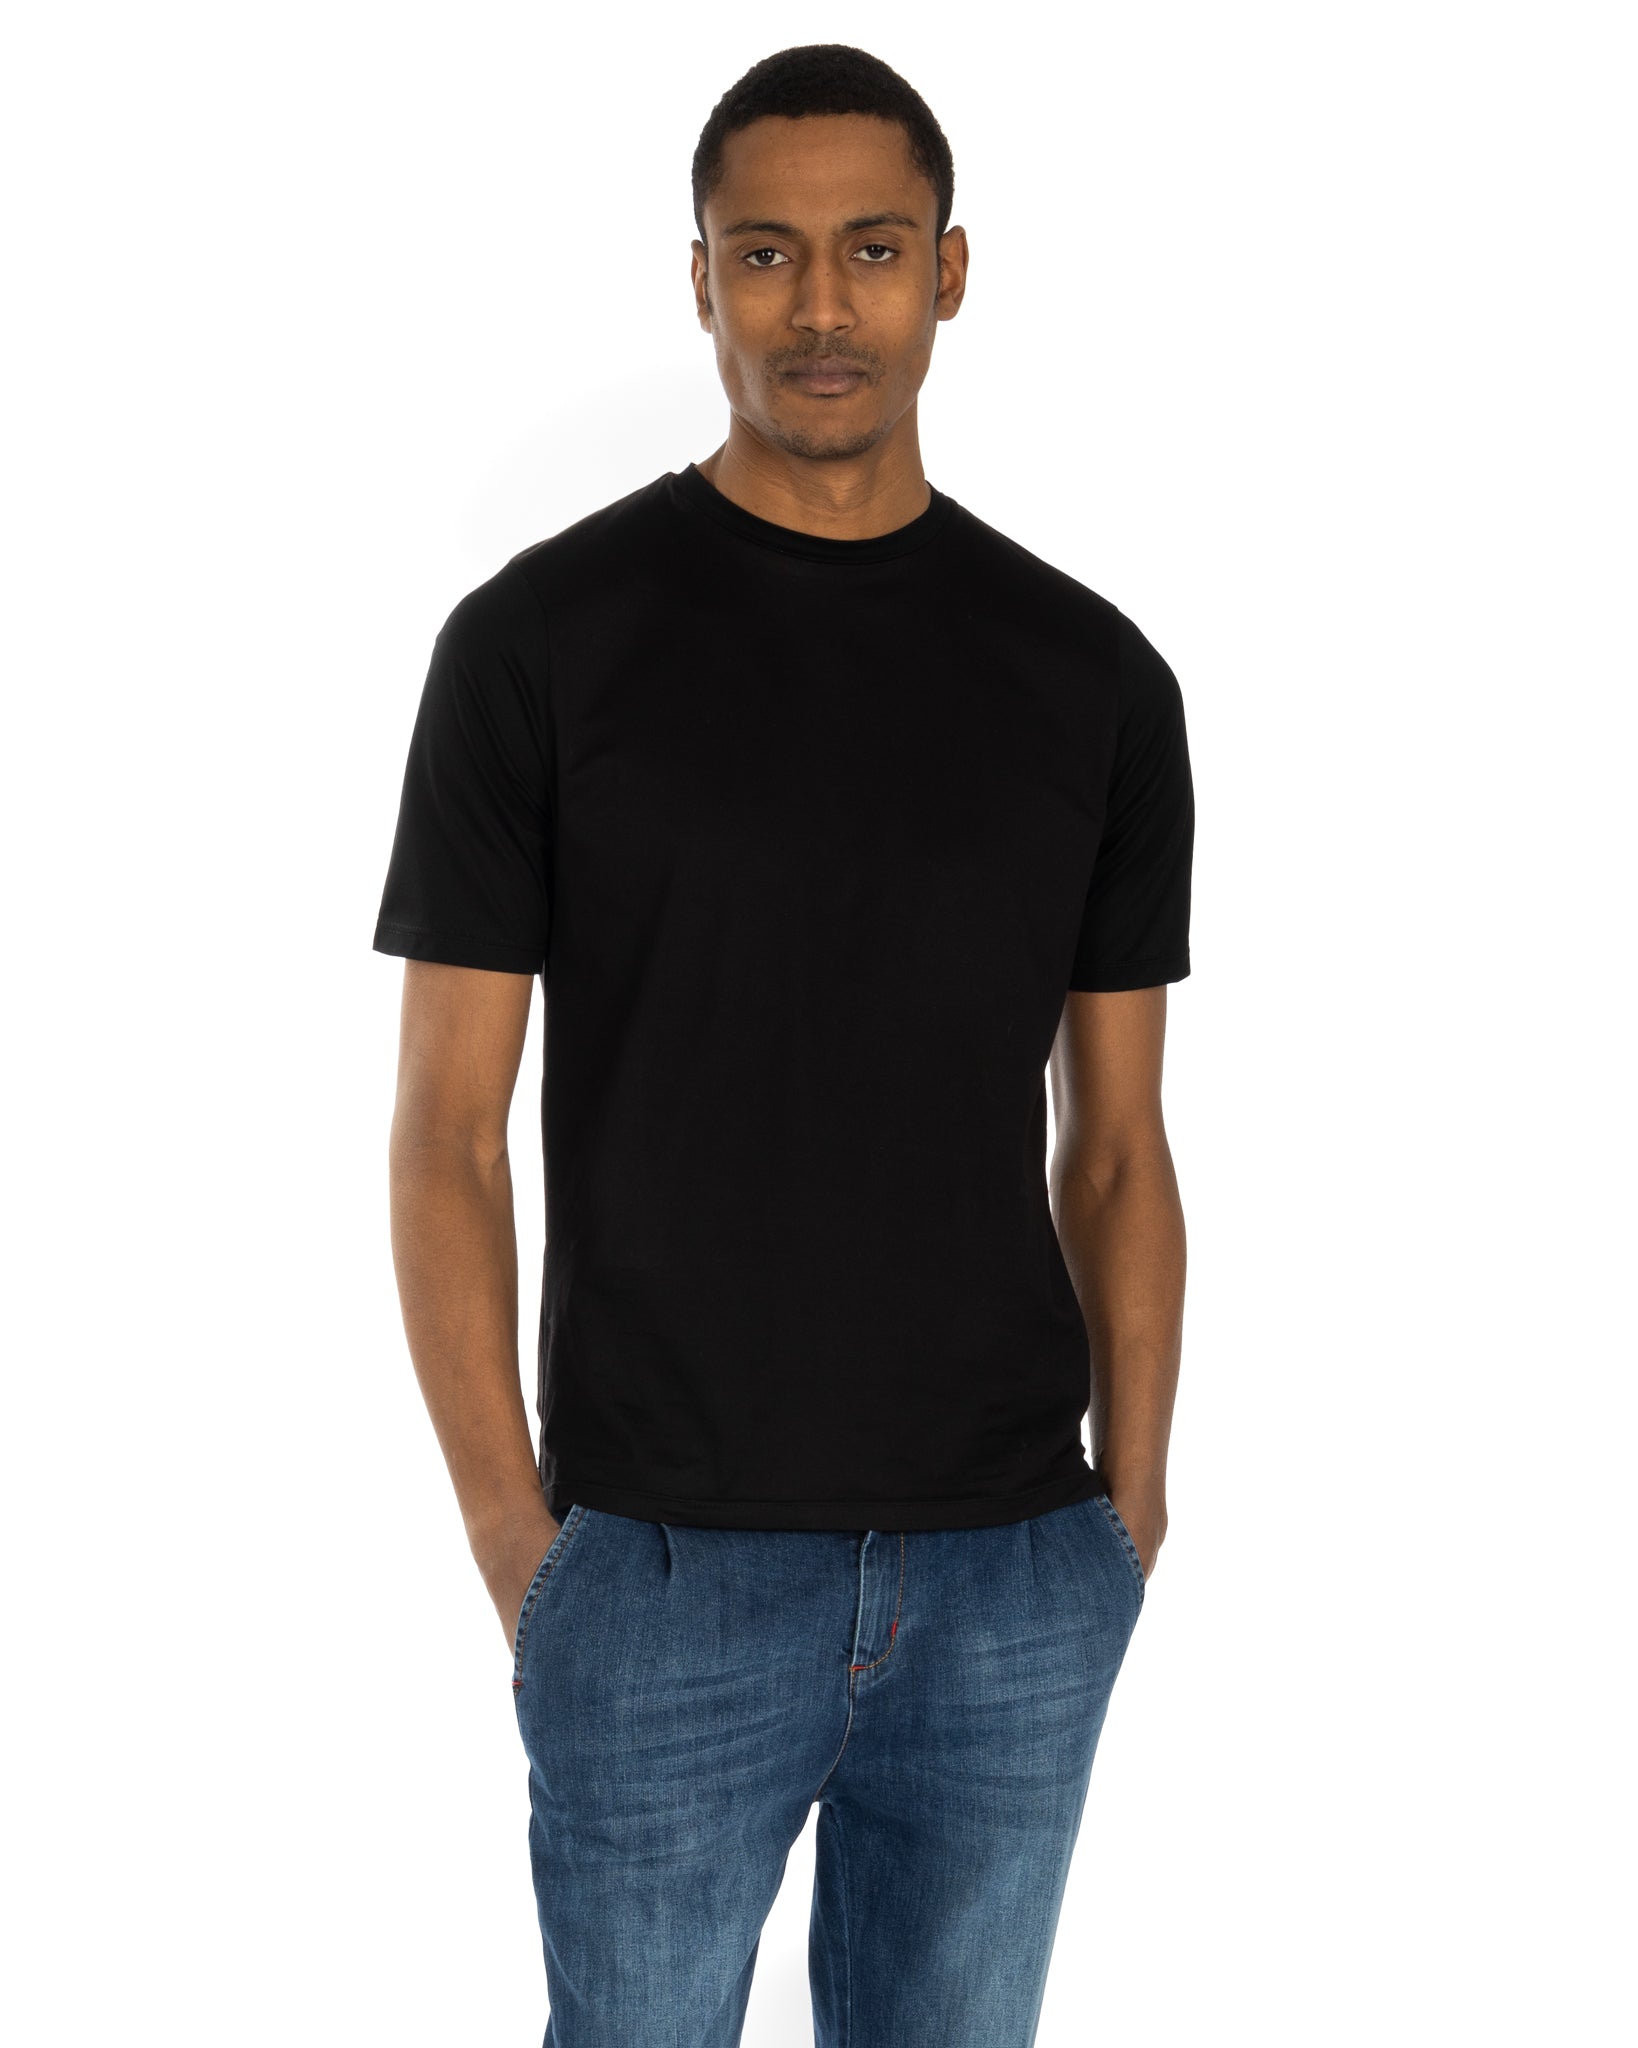 Glasgow - black lisle t-shirt